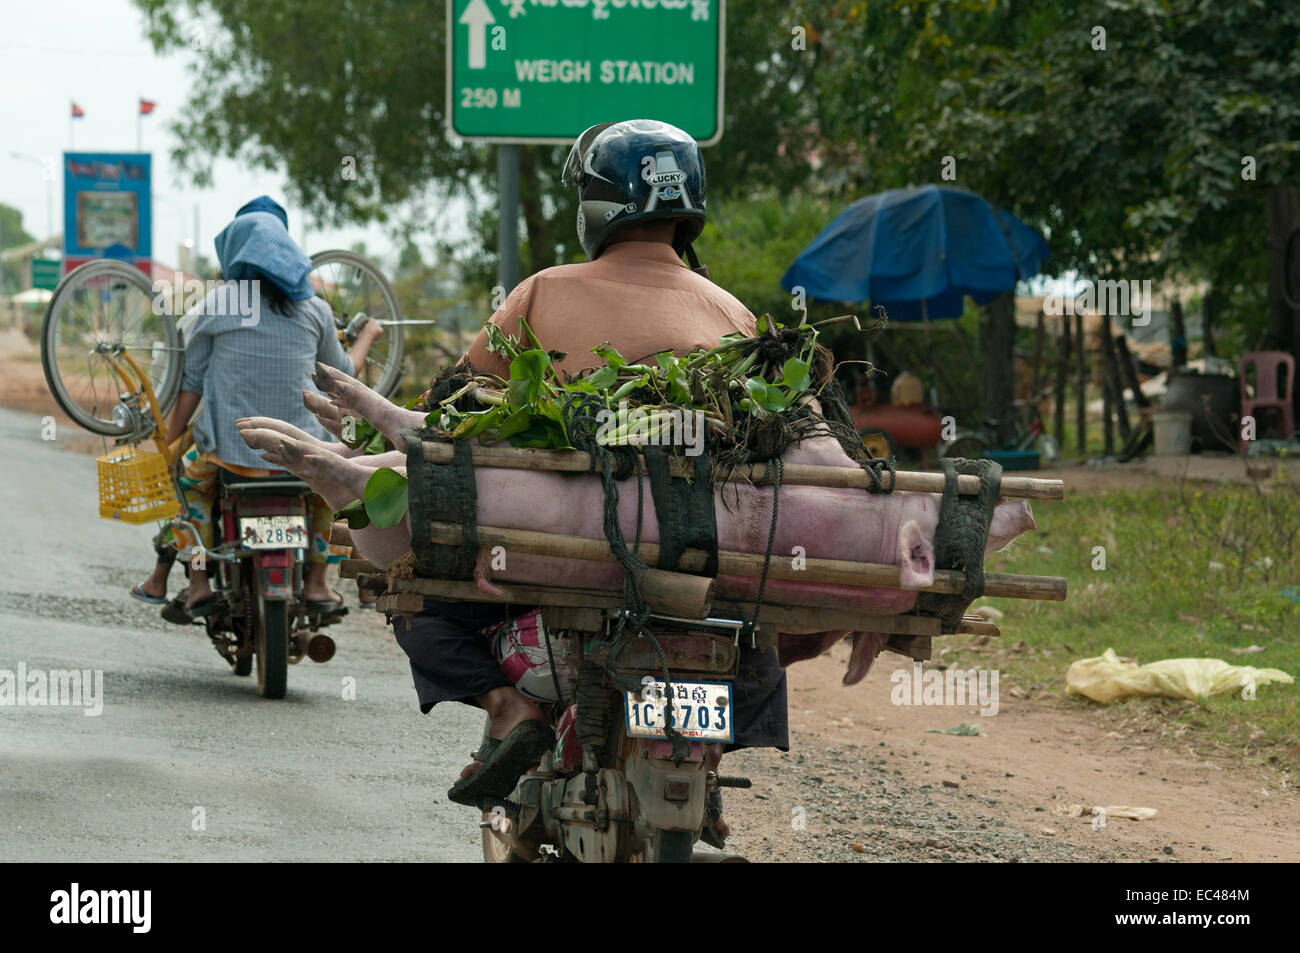 Entire slaughtered pig as a pillion rider on a motorbike, Battambang, Cambodia Stock Photo